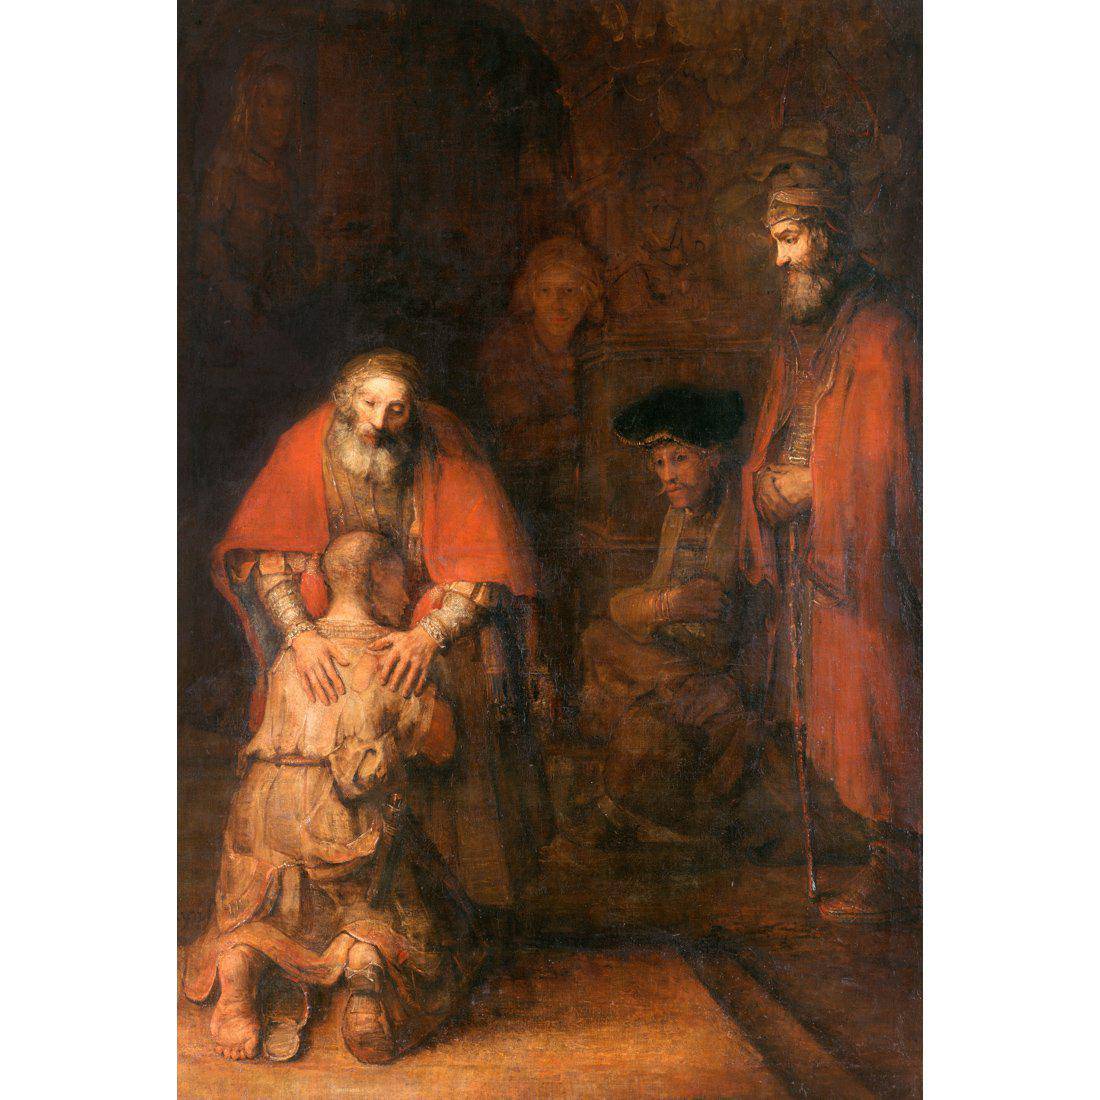 Return Of The Prodigal Son - Rembrandt Canvas Art-Canvas-Wall Art Designs-45x30cm-Canvas - No Frame-Wall Art Designs